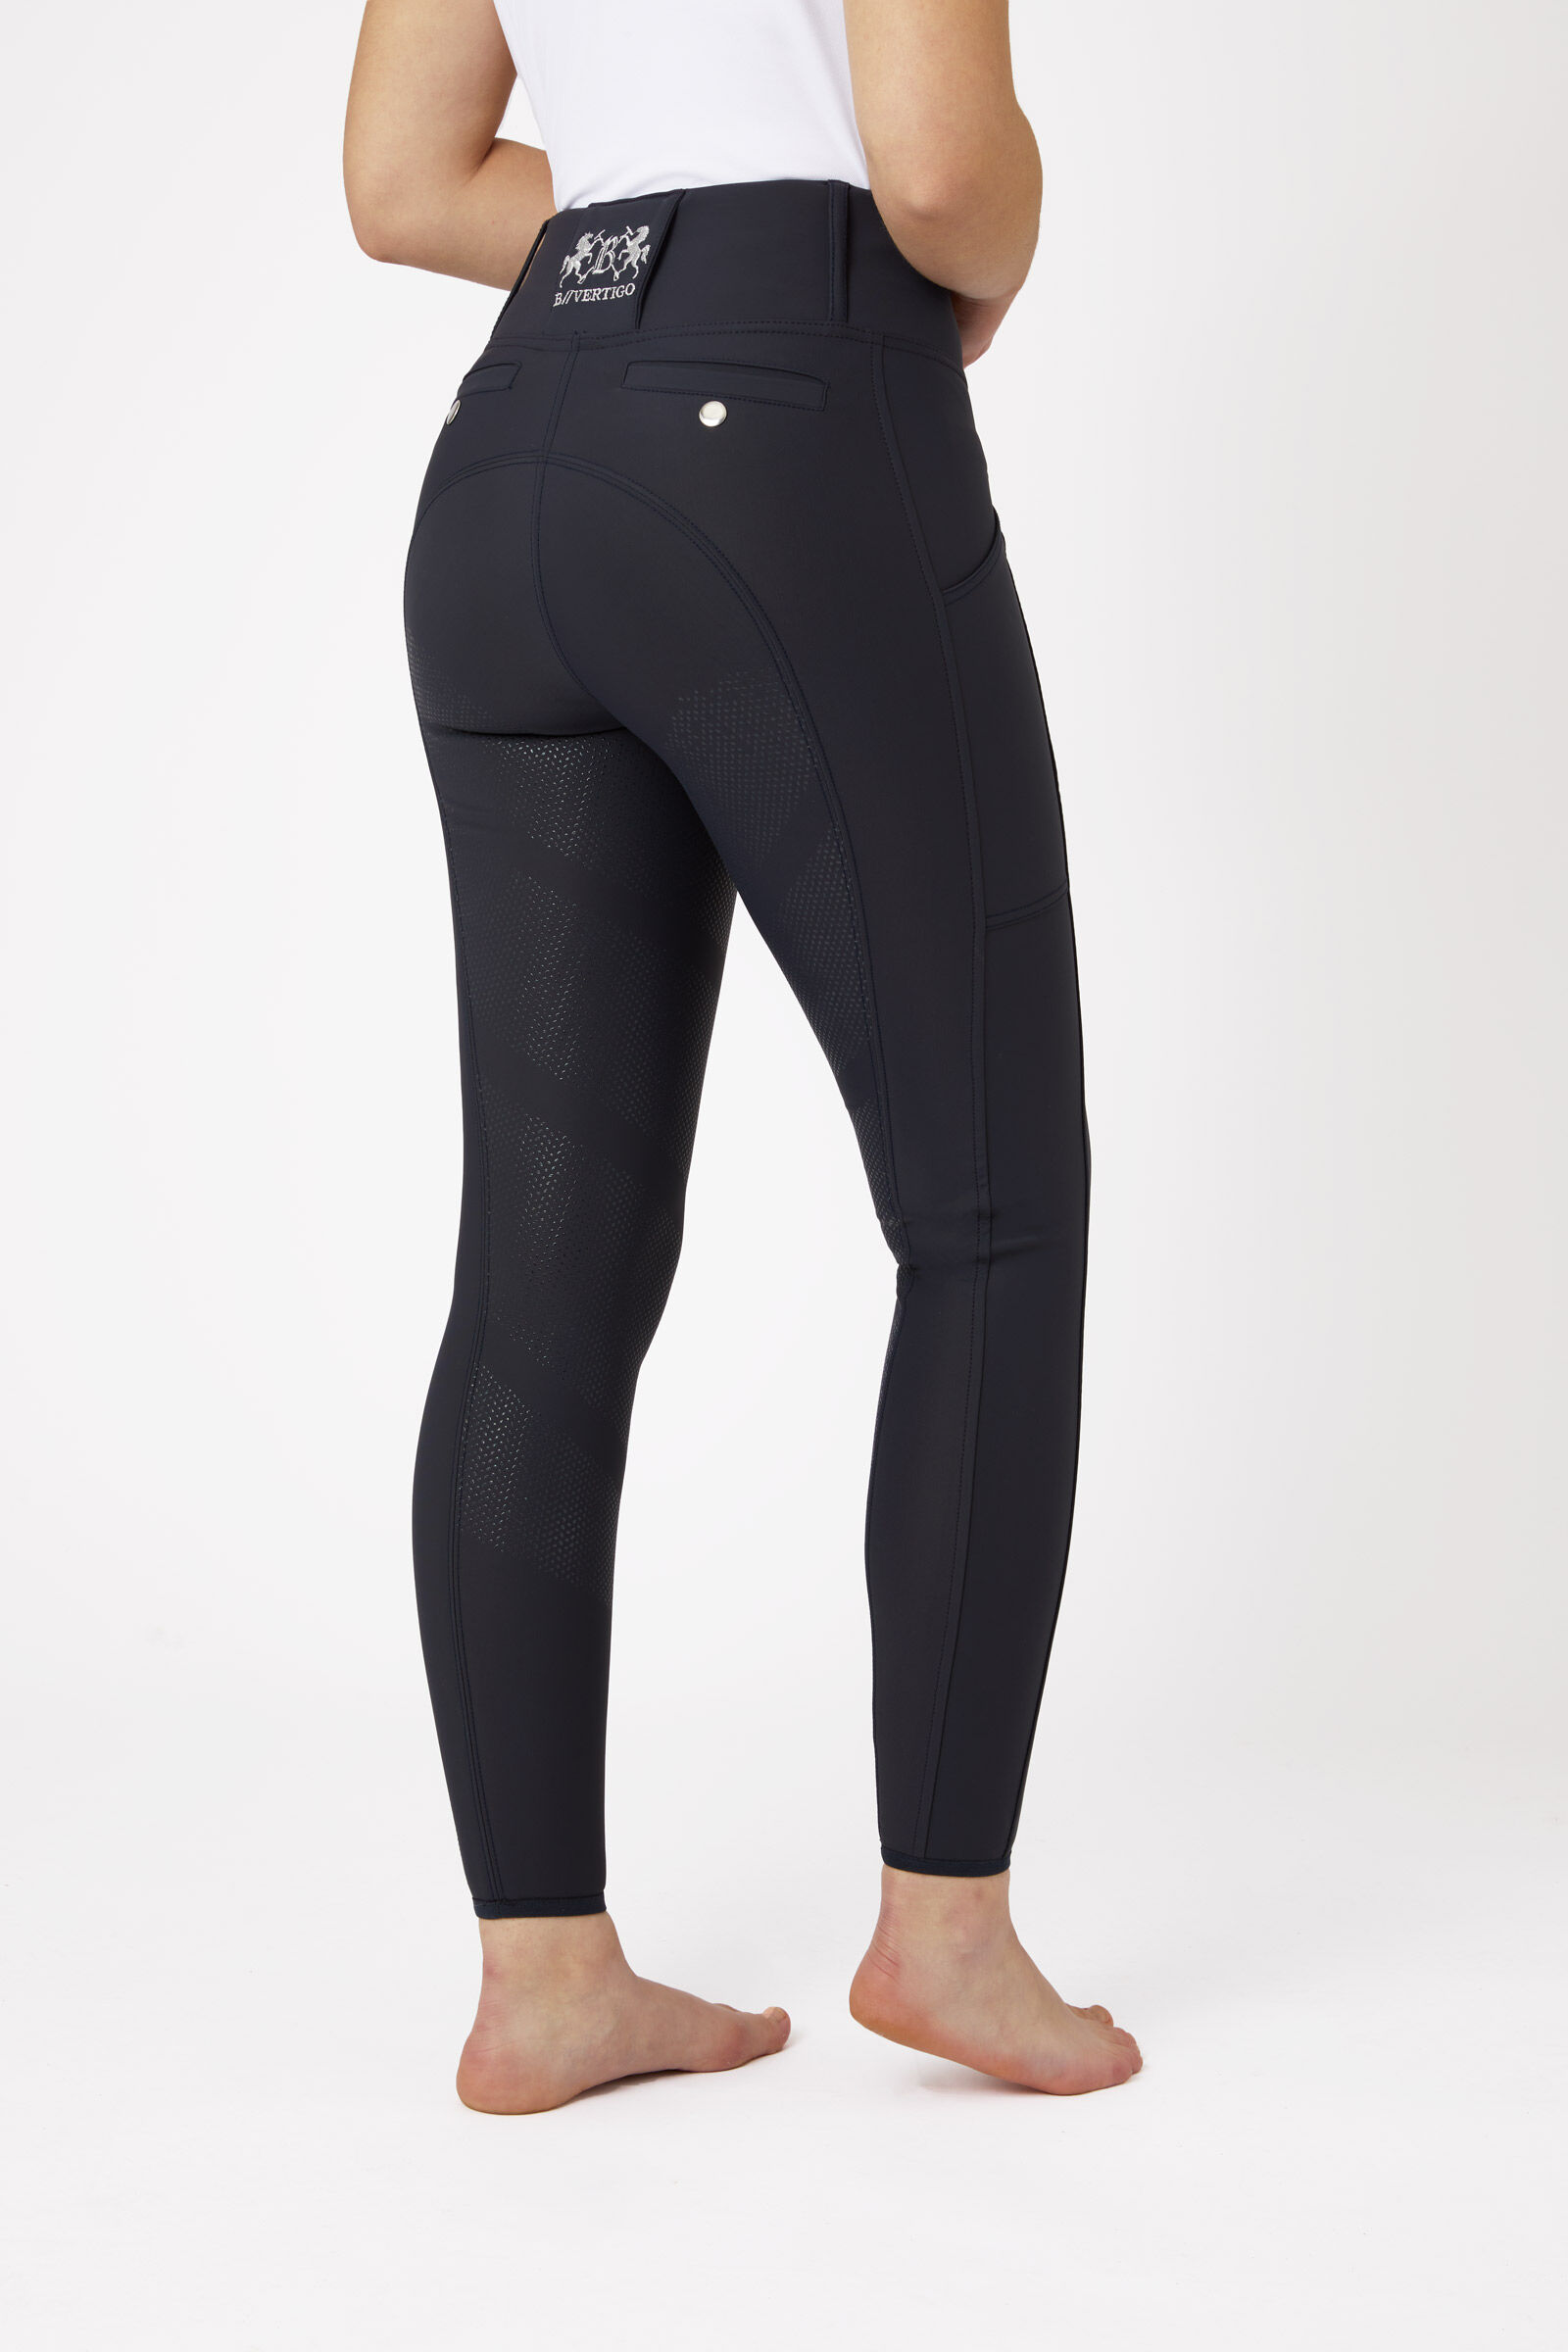 NWT Women's HUE Plaid Scuba Leggings Back Pocket Belt Loops Pant Gray/Black  S | eBay